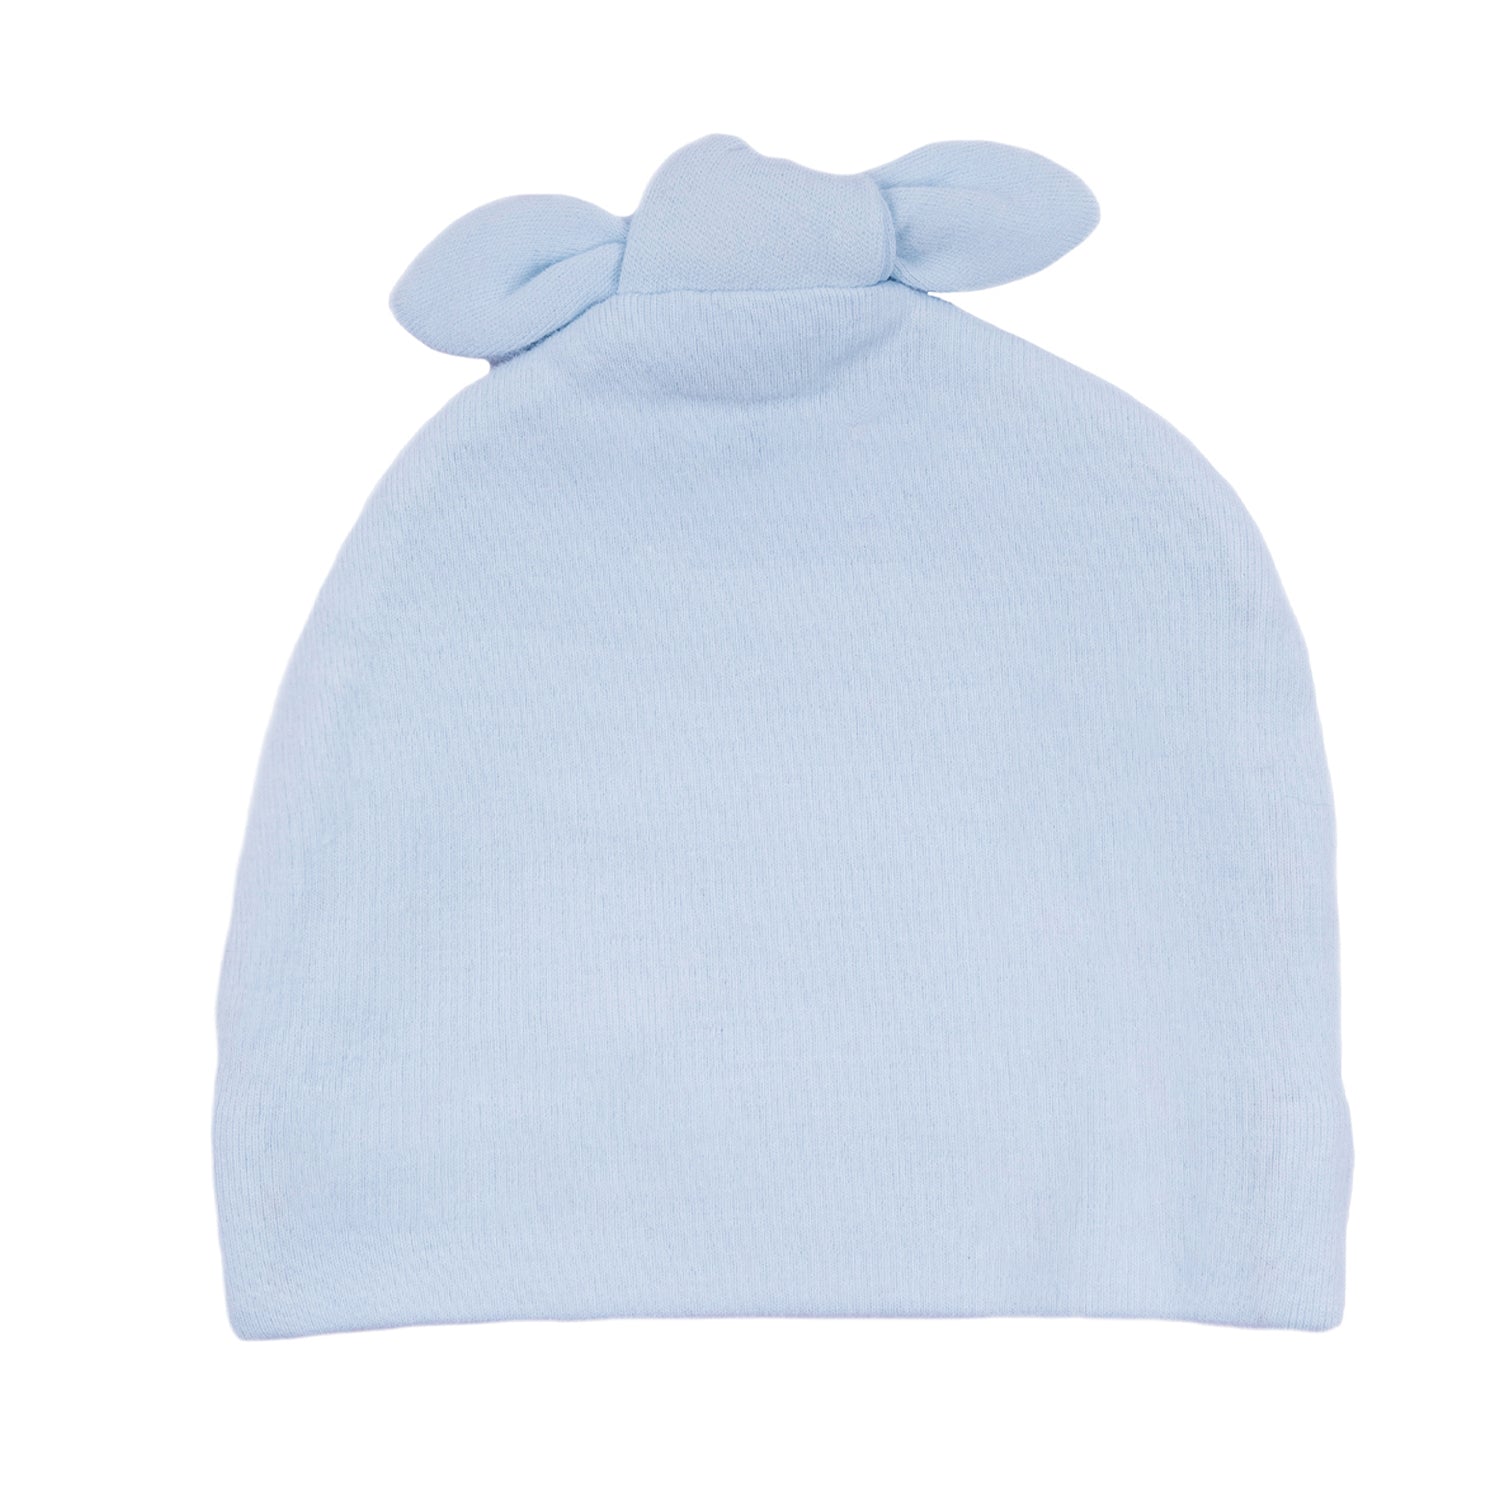 Baby Moo Striped All Season Stretchable Hosiery Warm 3D Beanie Cap - Blue, Grey